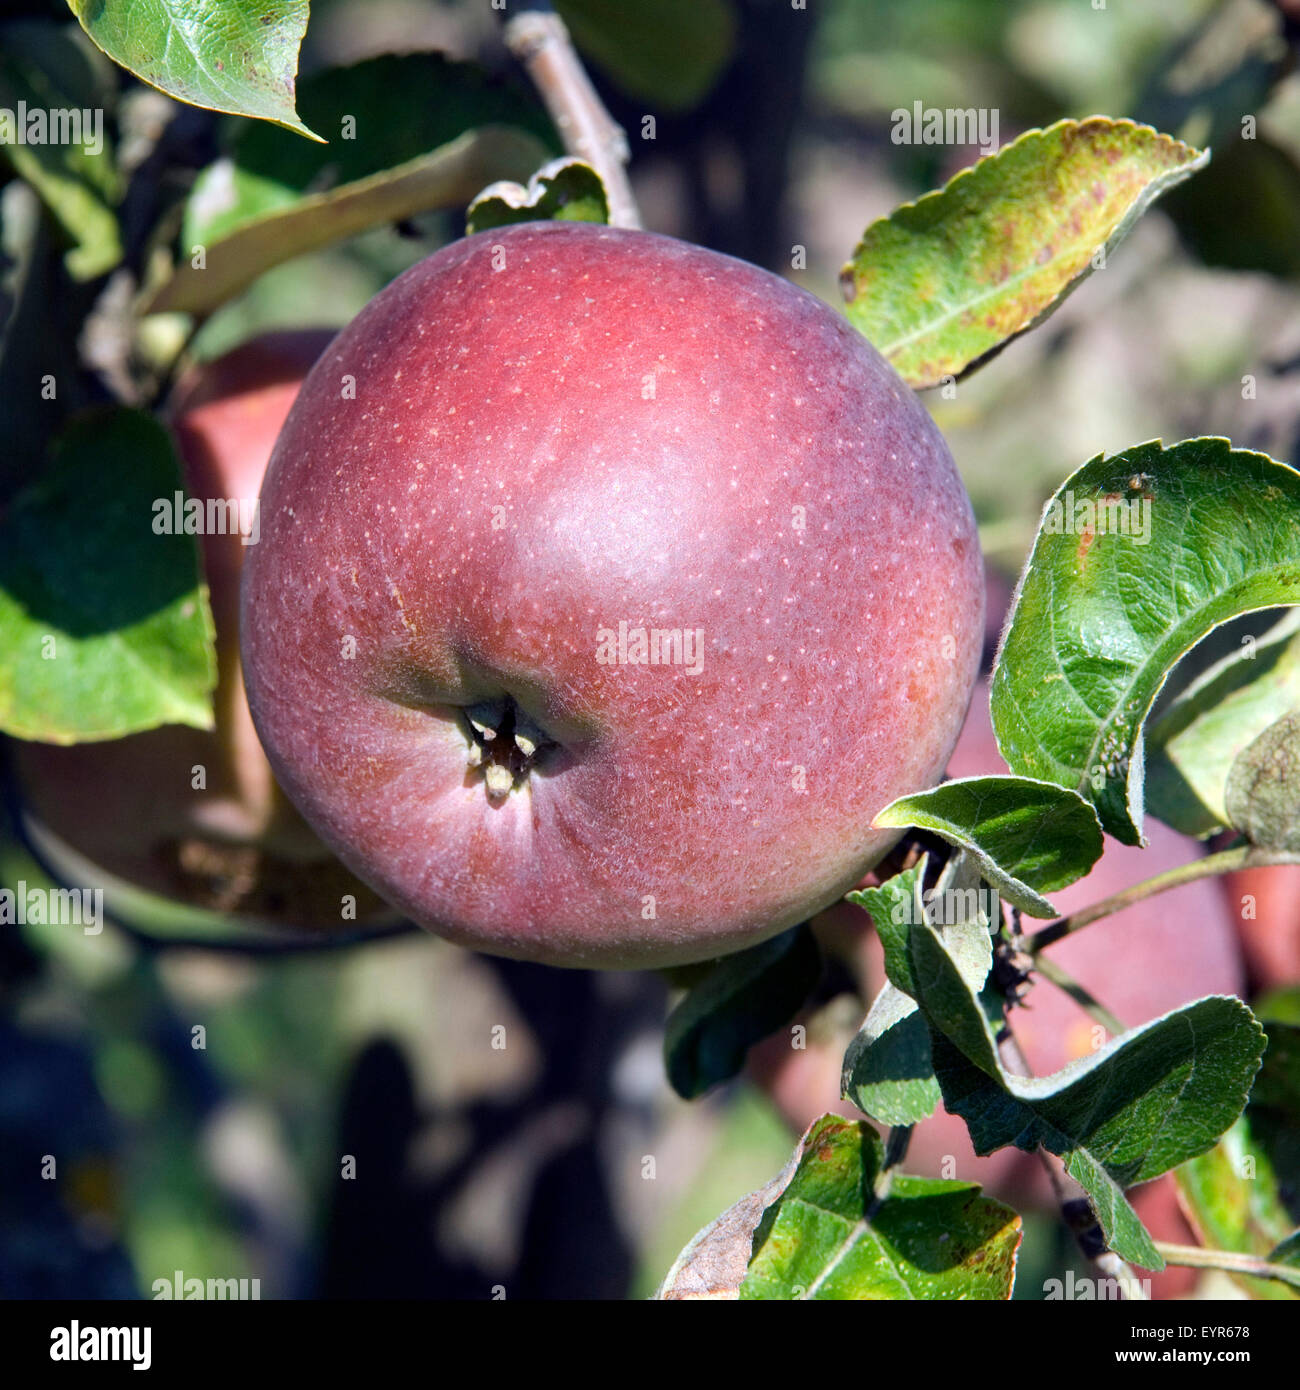 Schwarzer Mahrapfel; Apfel; Malus domestica, Apfelsorte, Apfel, Kernobst, Obst, Foto Stock